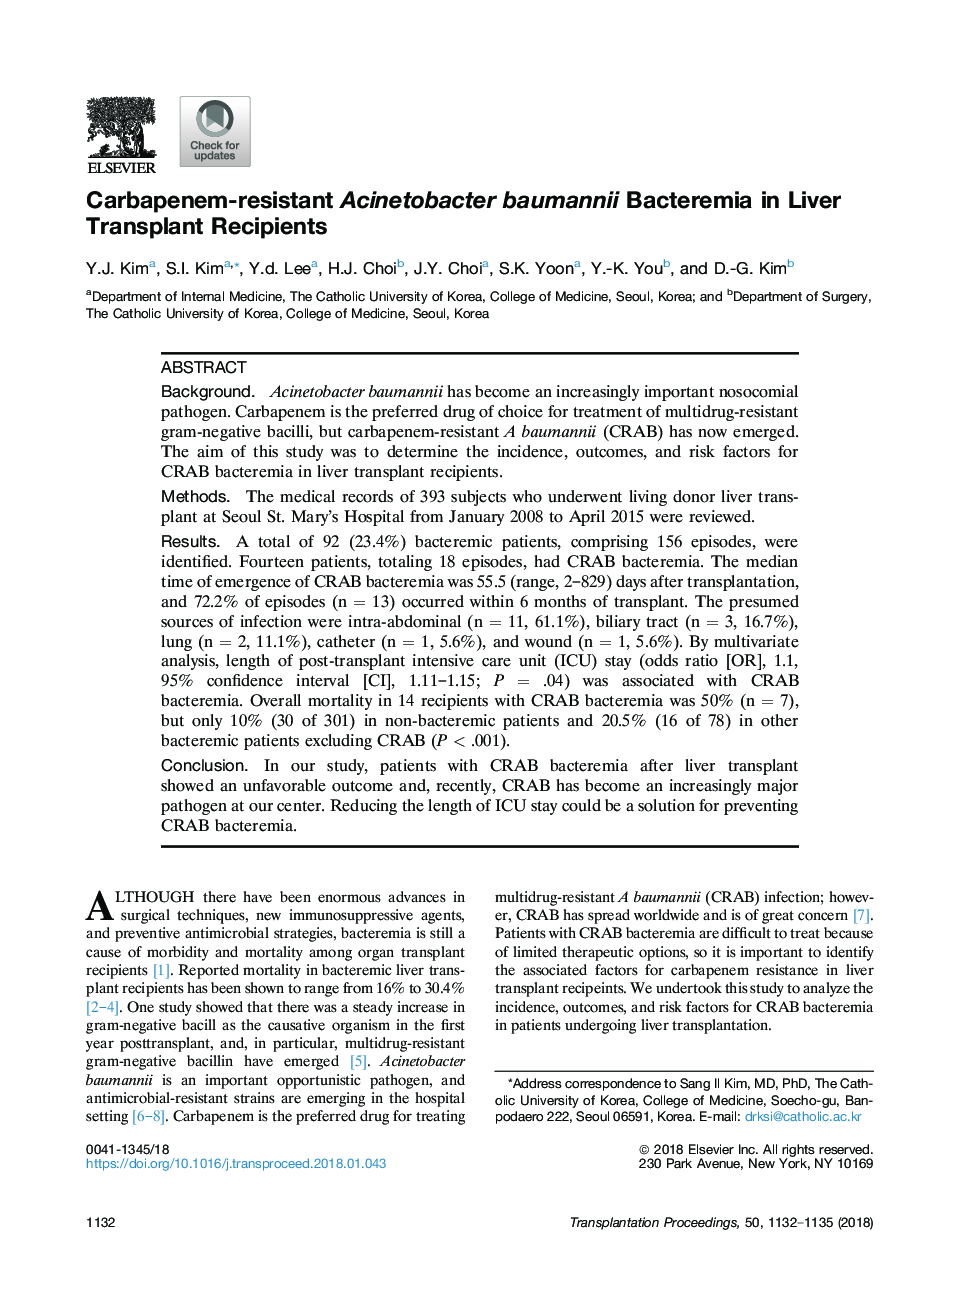 Carbapenem-resistant Acinetobacter baumannii Bacteremia in Liver Transplant Recipients